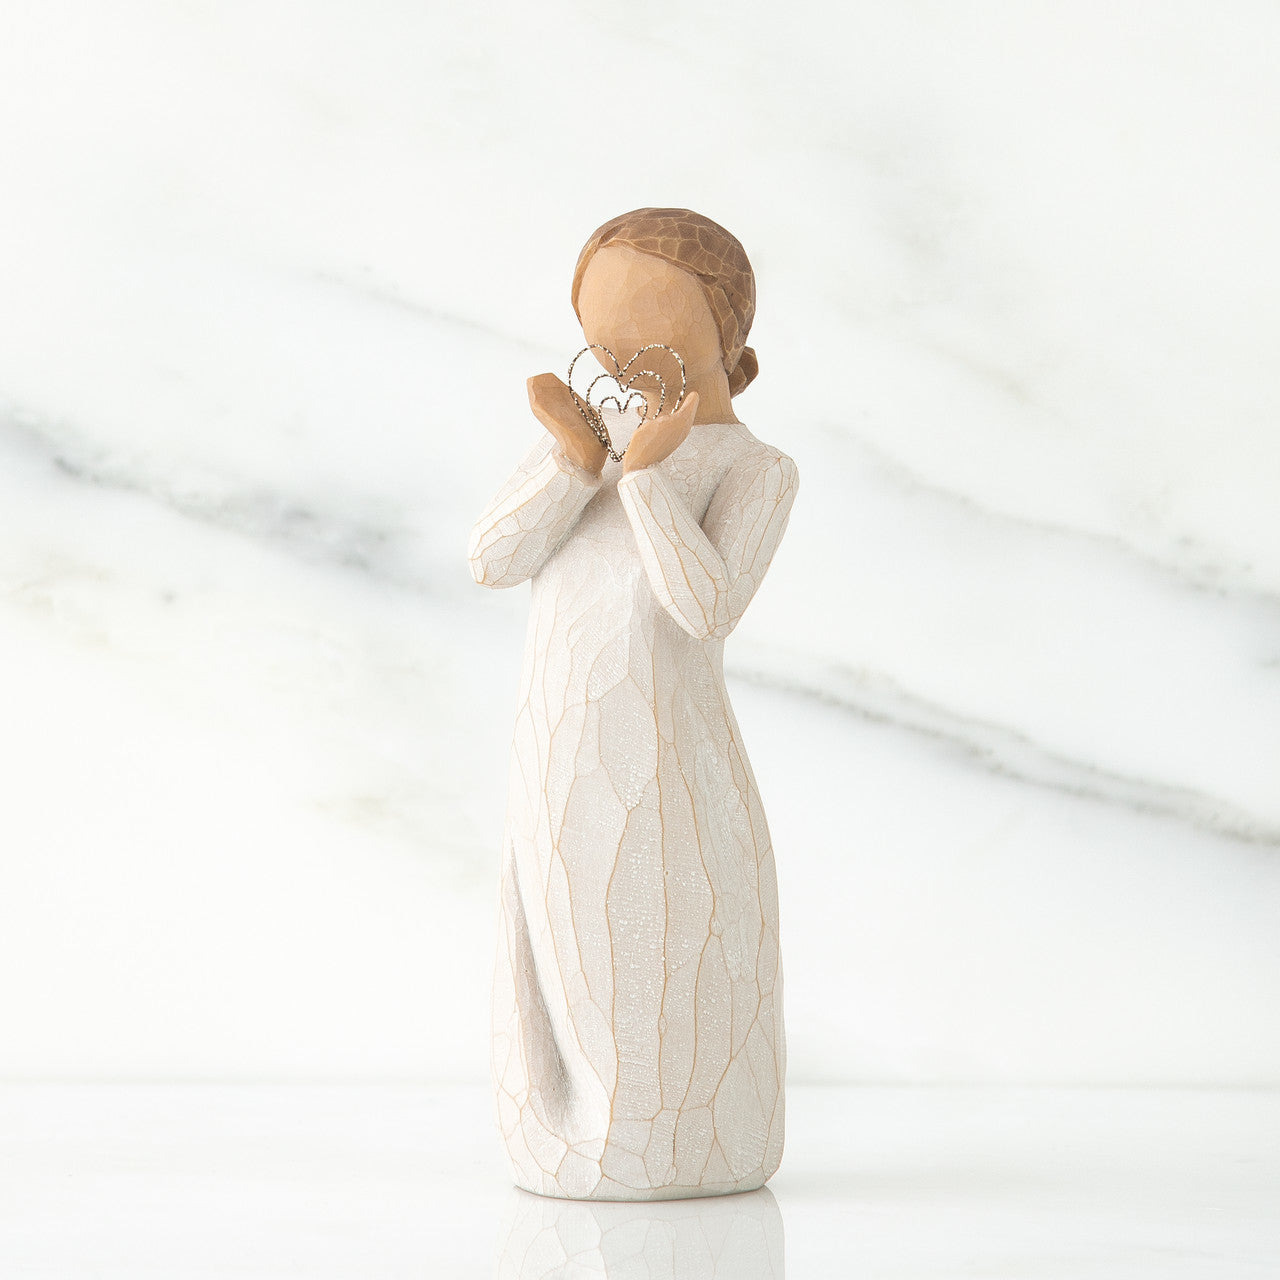 'Lots Of Love' Figurine